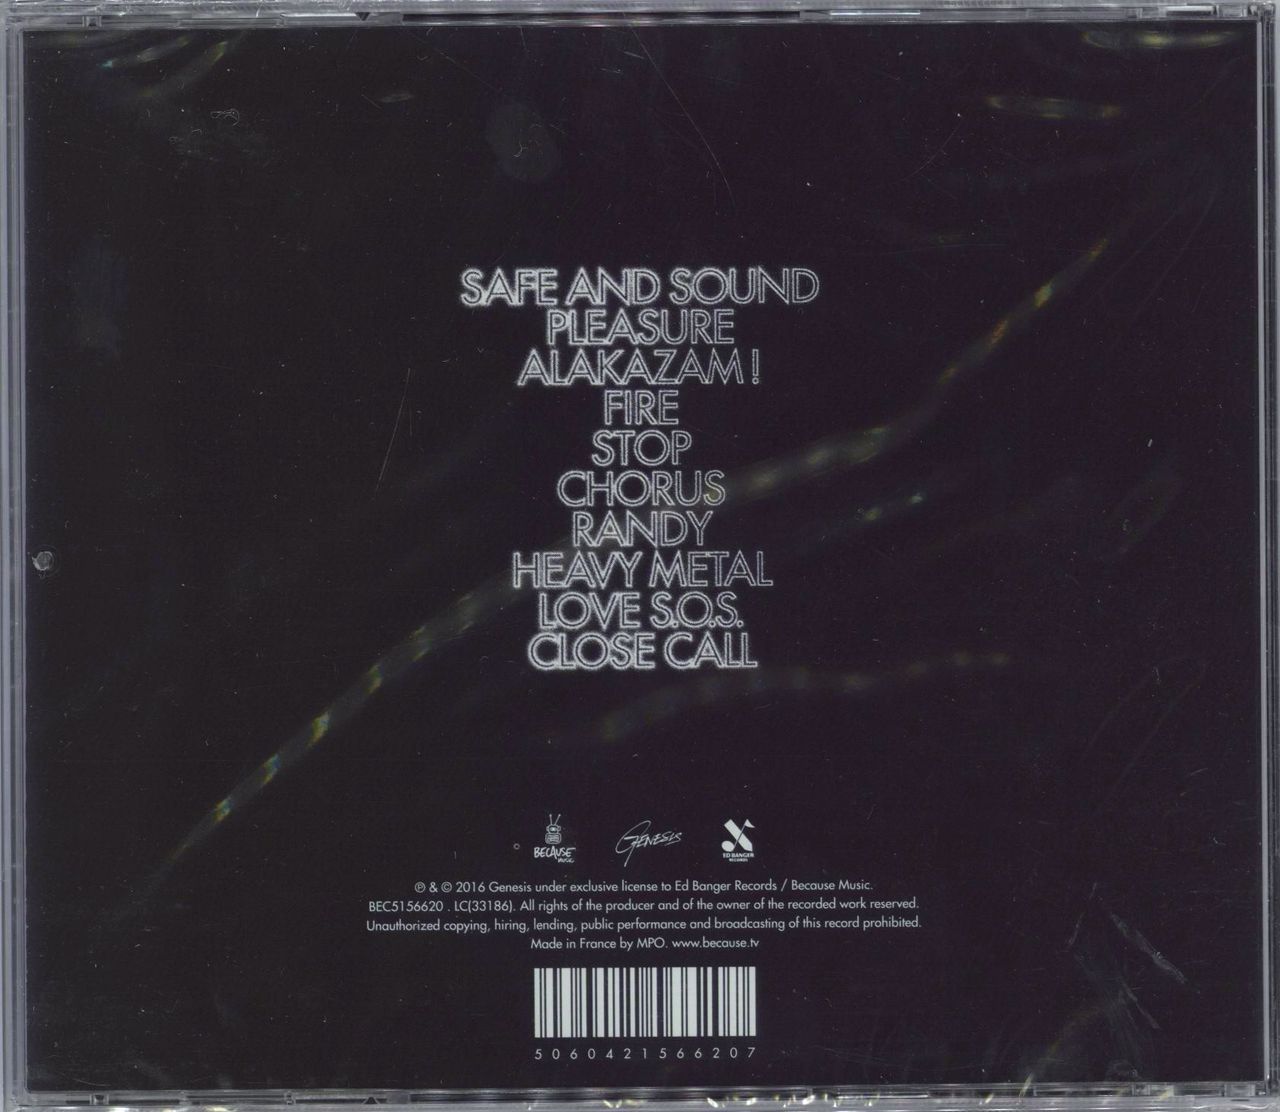 Justice Woman - Sealed UK CD album (CDLP) 5060421566207